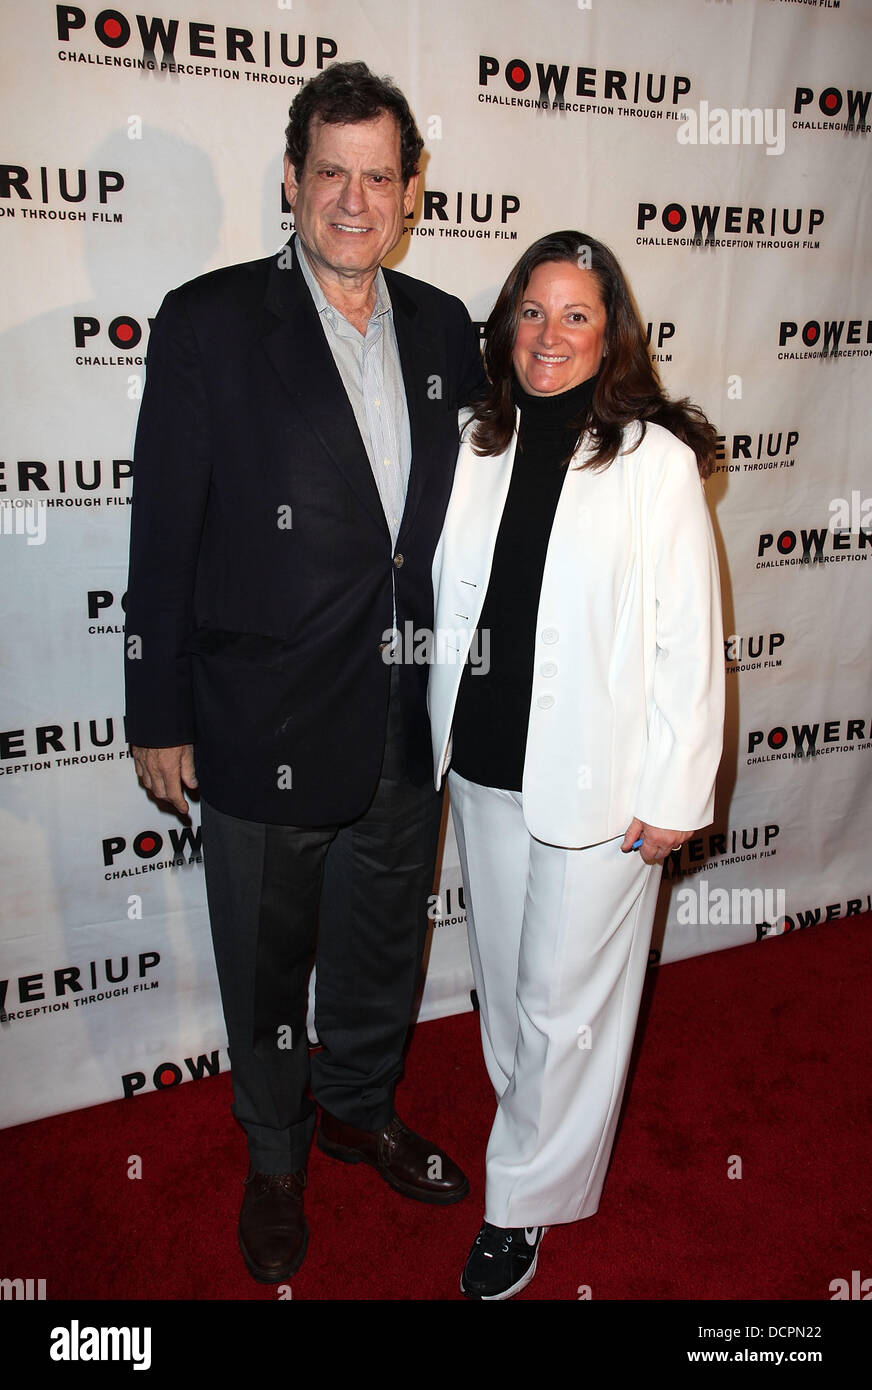 Howard Rosenman and Lisa Thrasher 2011 POWER UP Annual Power Premiere  Awards at EDEN Hollywood, California - 06.11.11 Stock Photo - Alamy